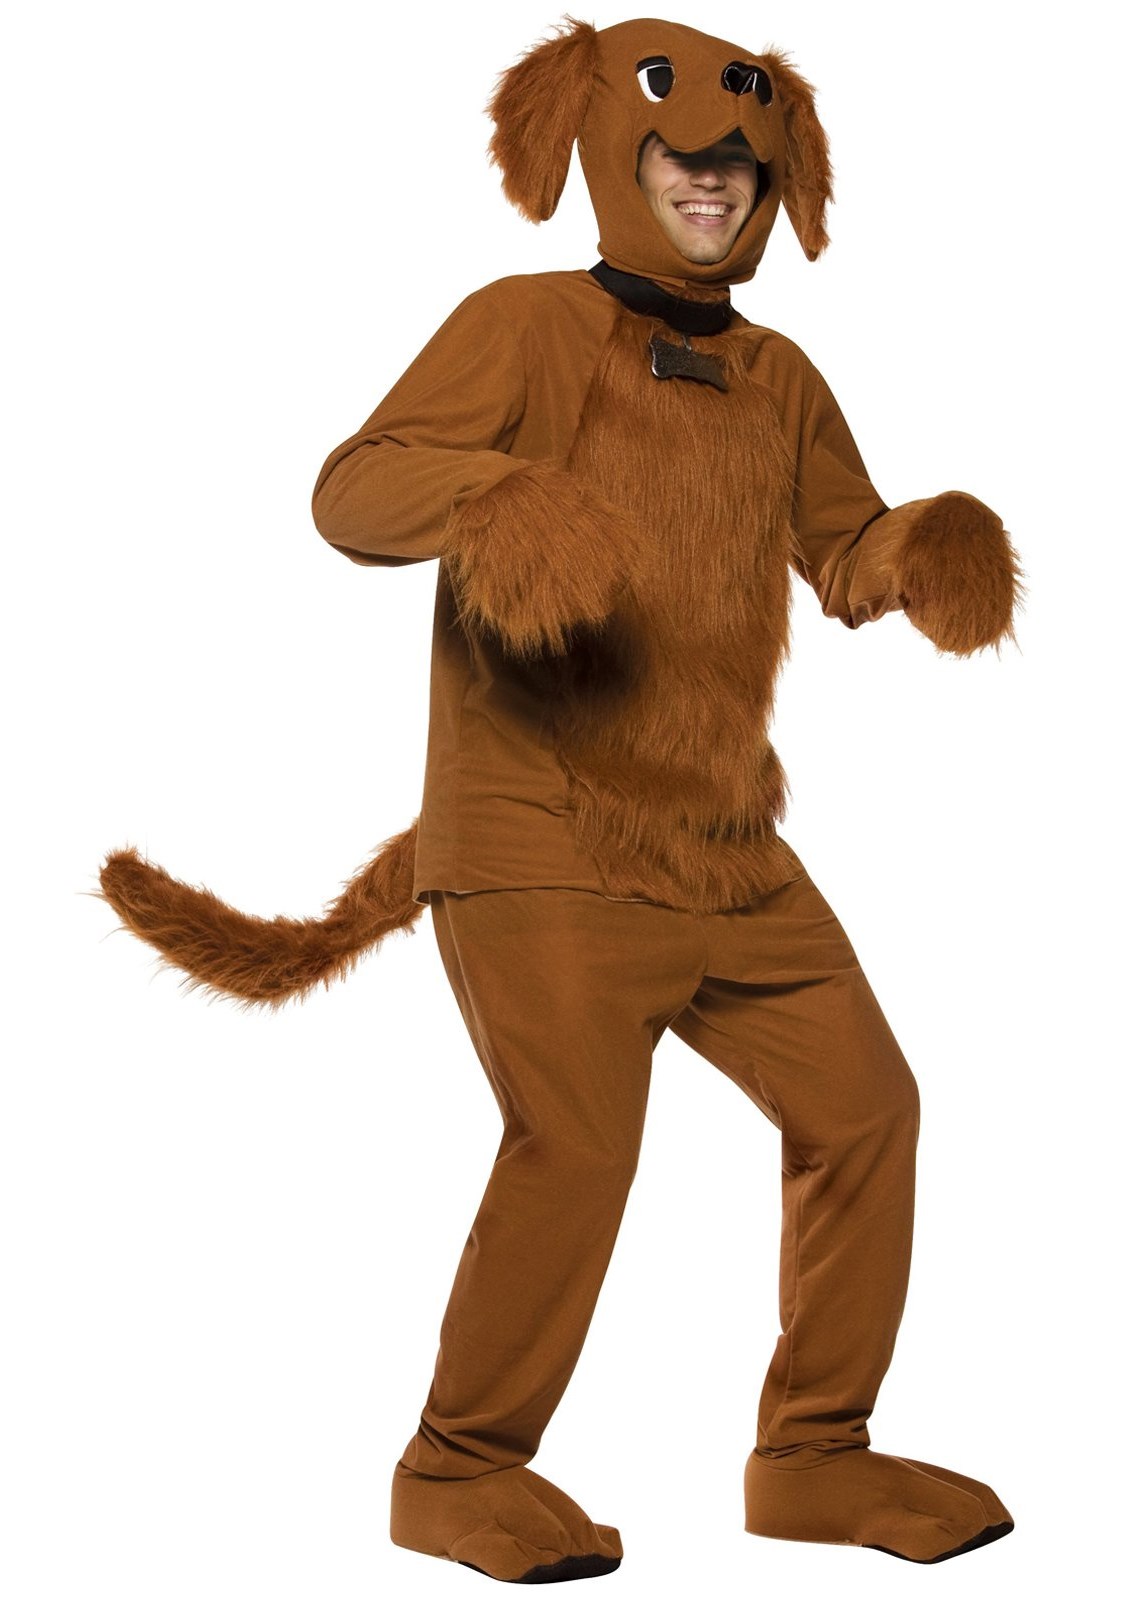 Whattup Dog Adult Costume